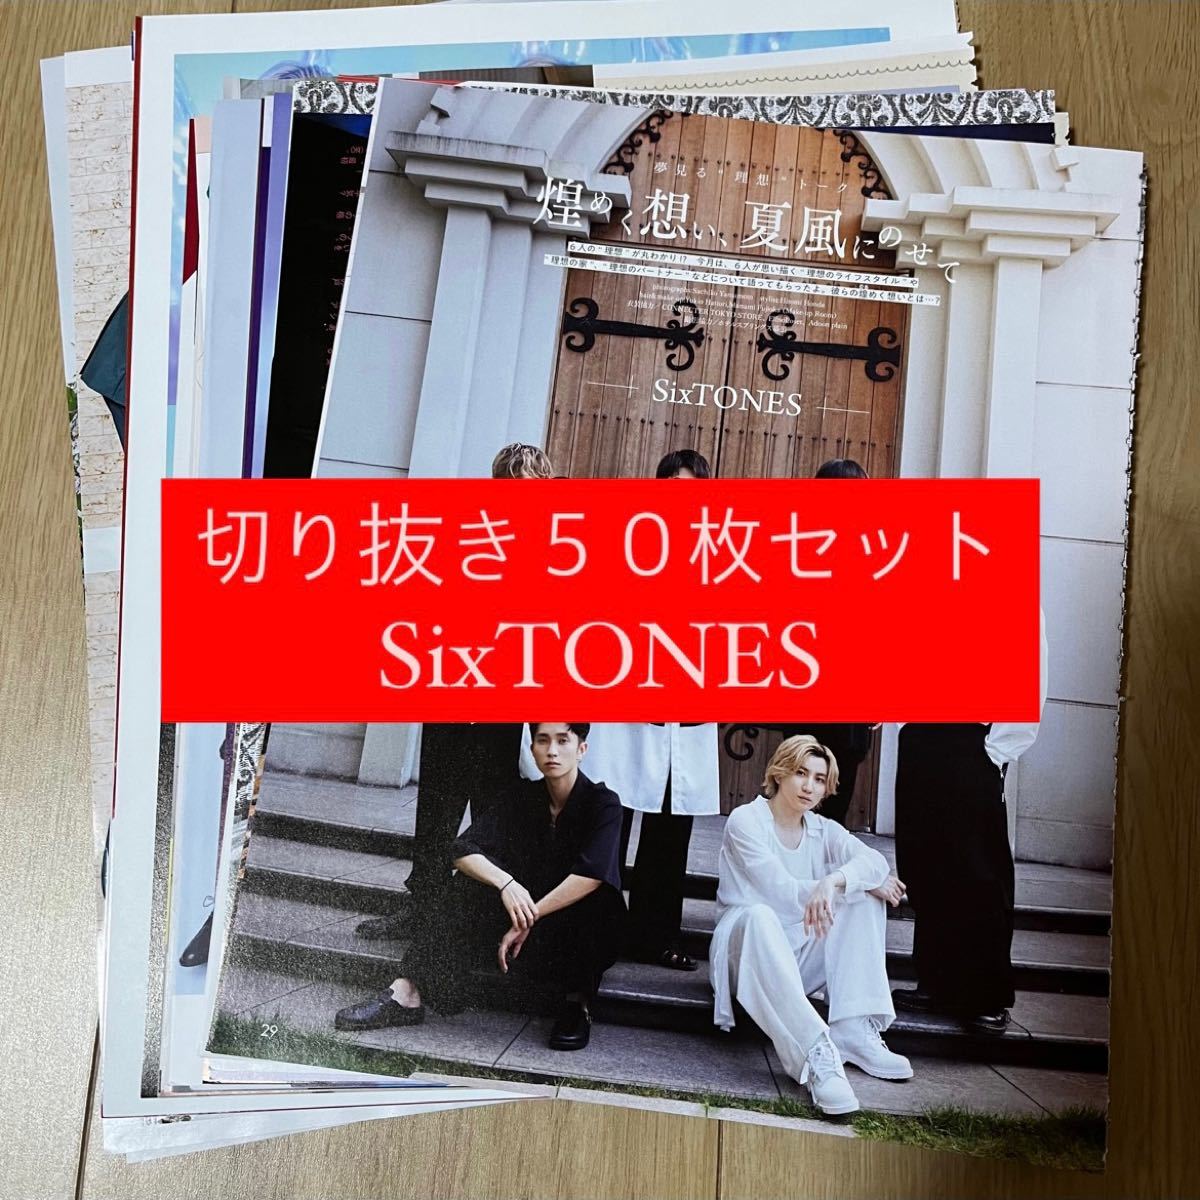 SixTONES】 アイドル誌⠀切り抜き⠀大量⠀まとめ売り - www.onkajans.com